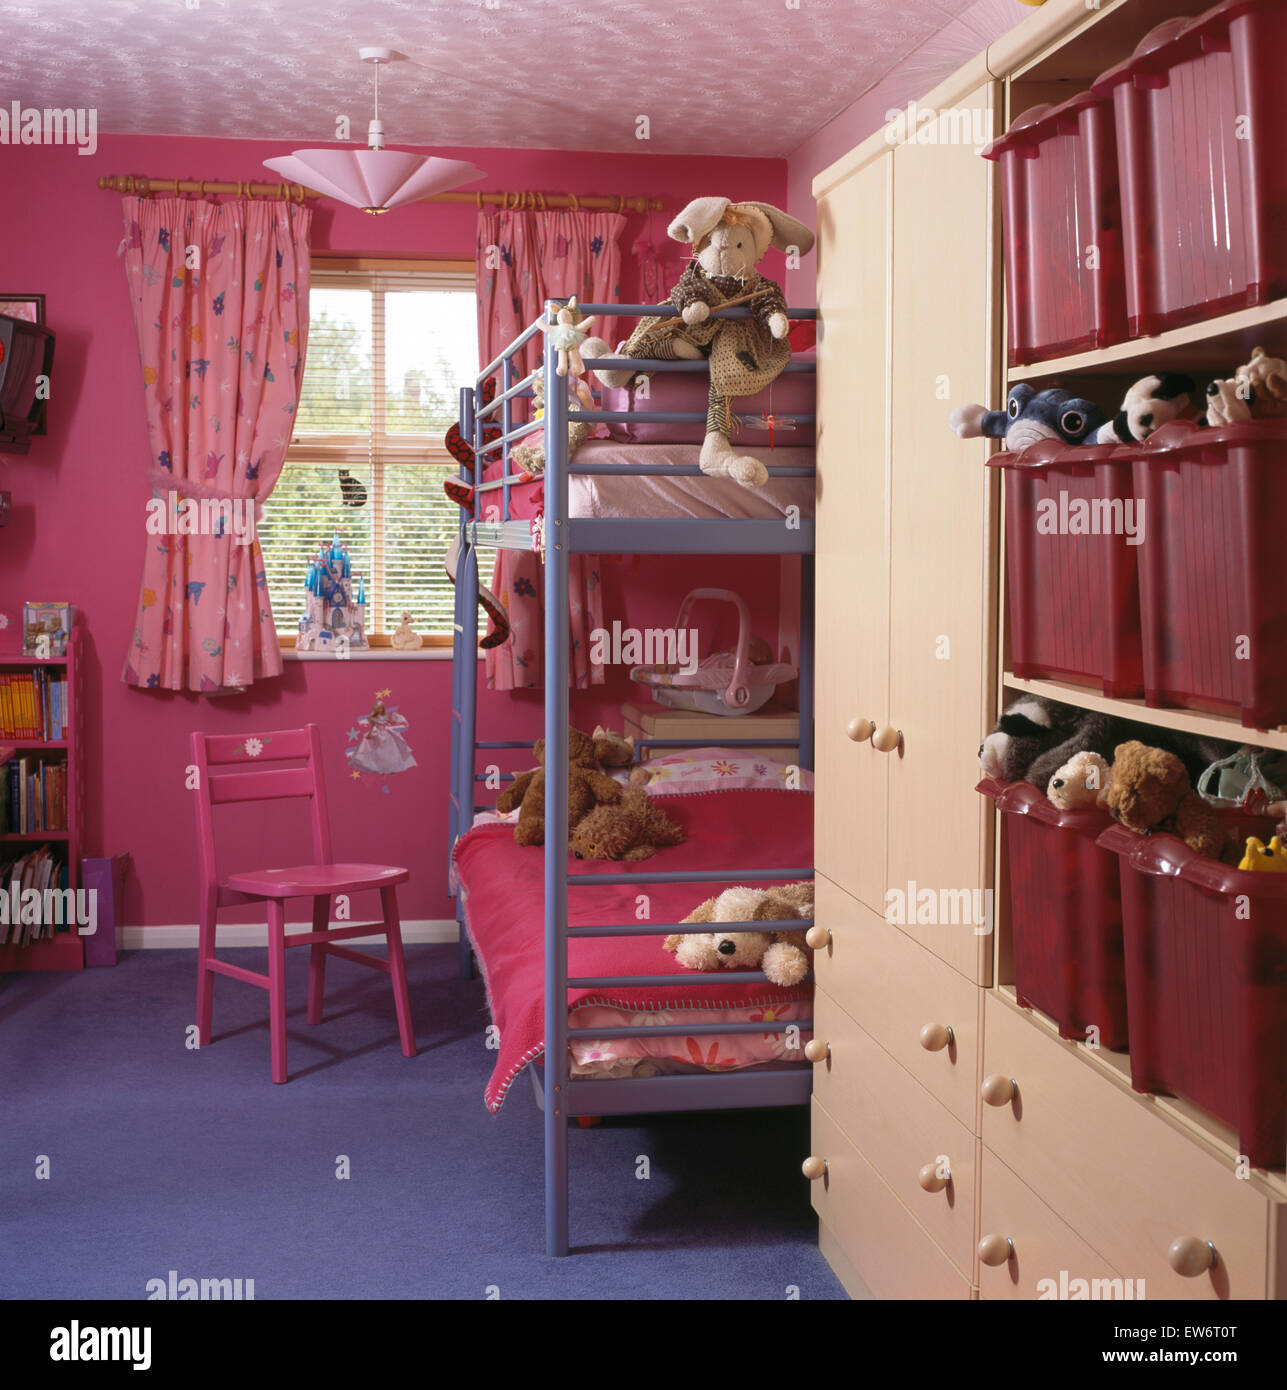 Metal bunk beds in child's bright pink nineties bedroom with plastic storage bins on built in shelves Stock Photo